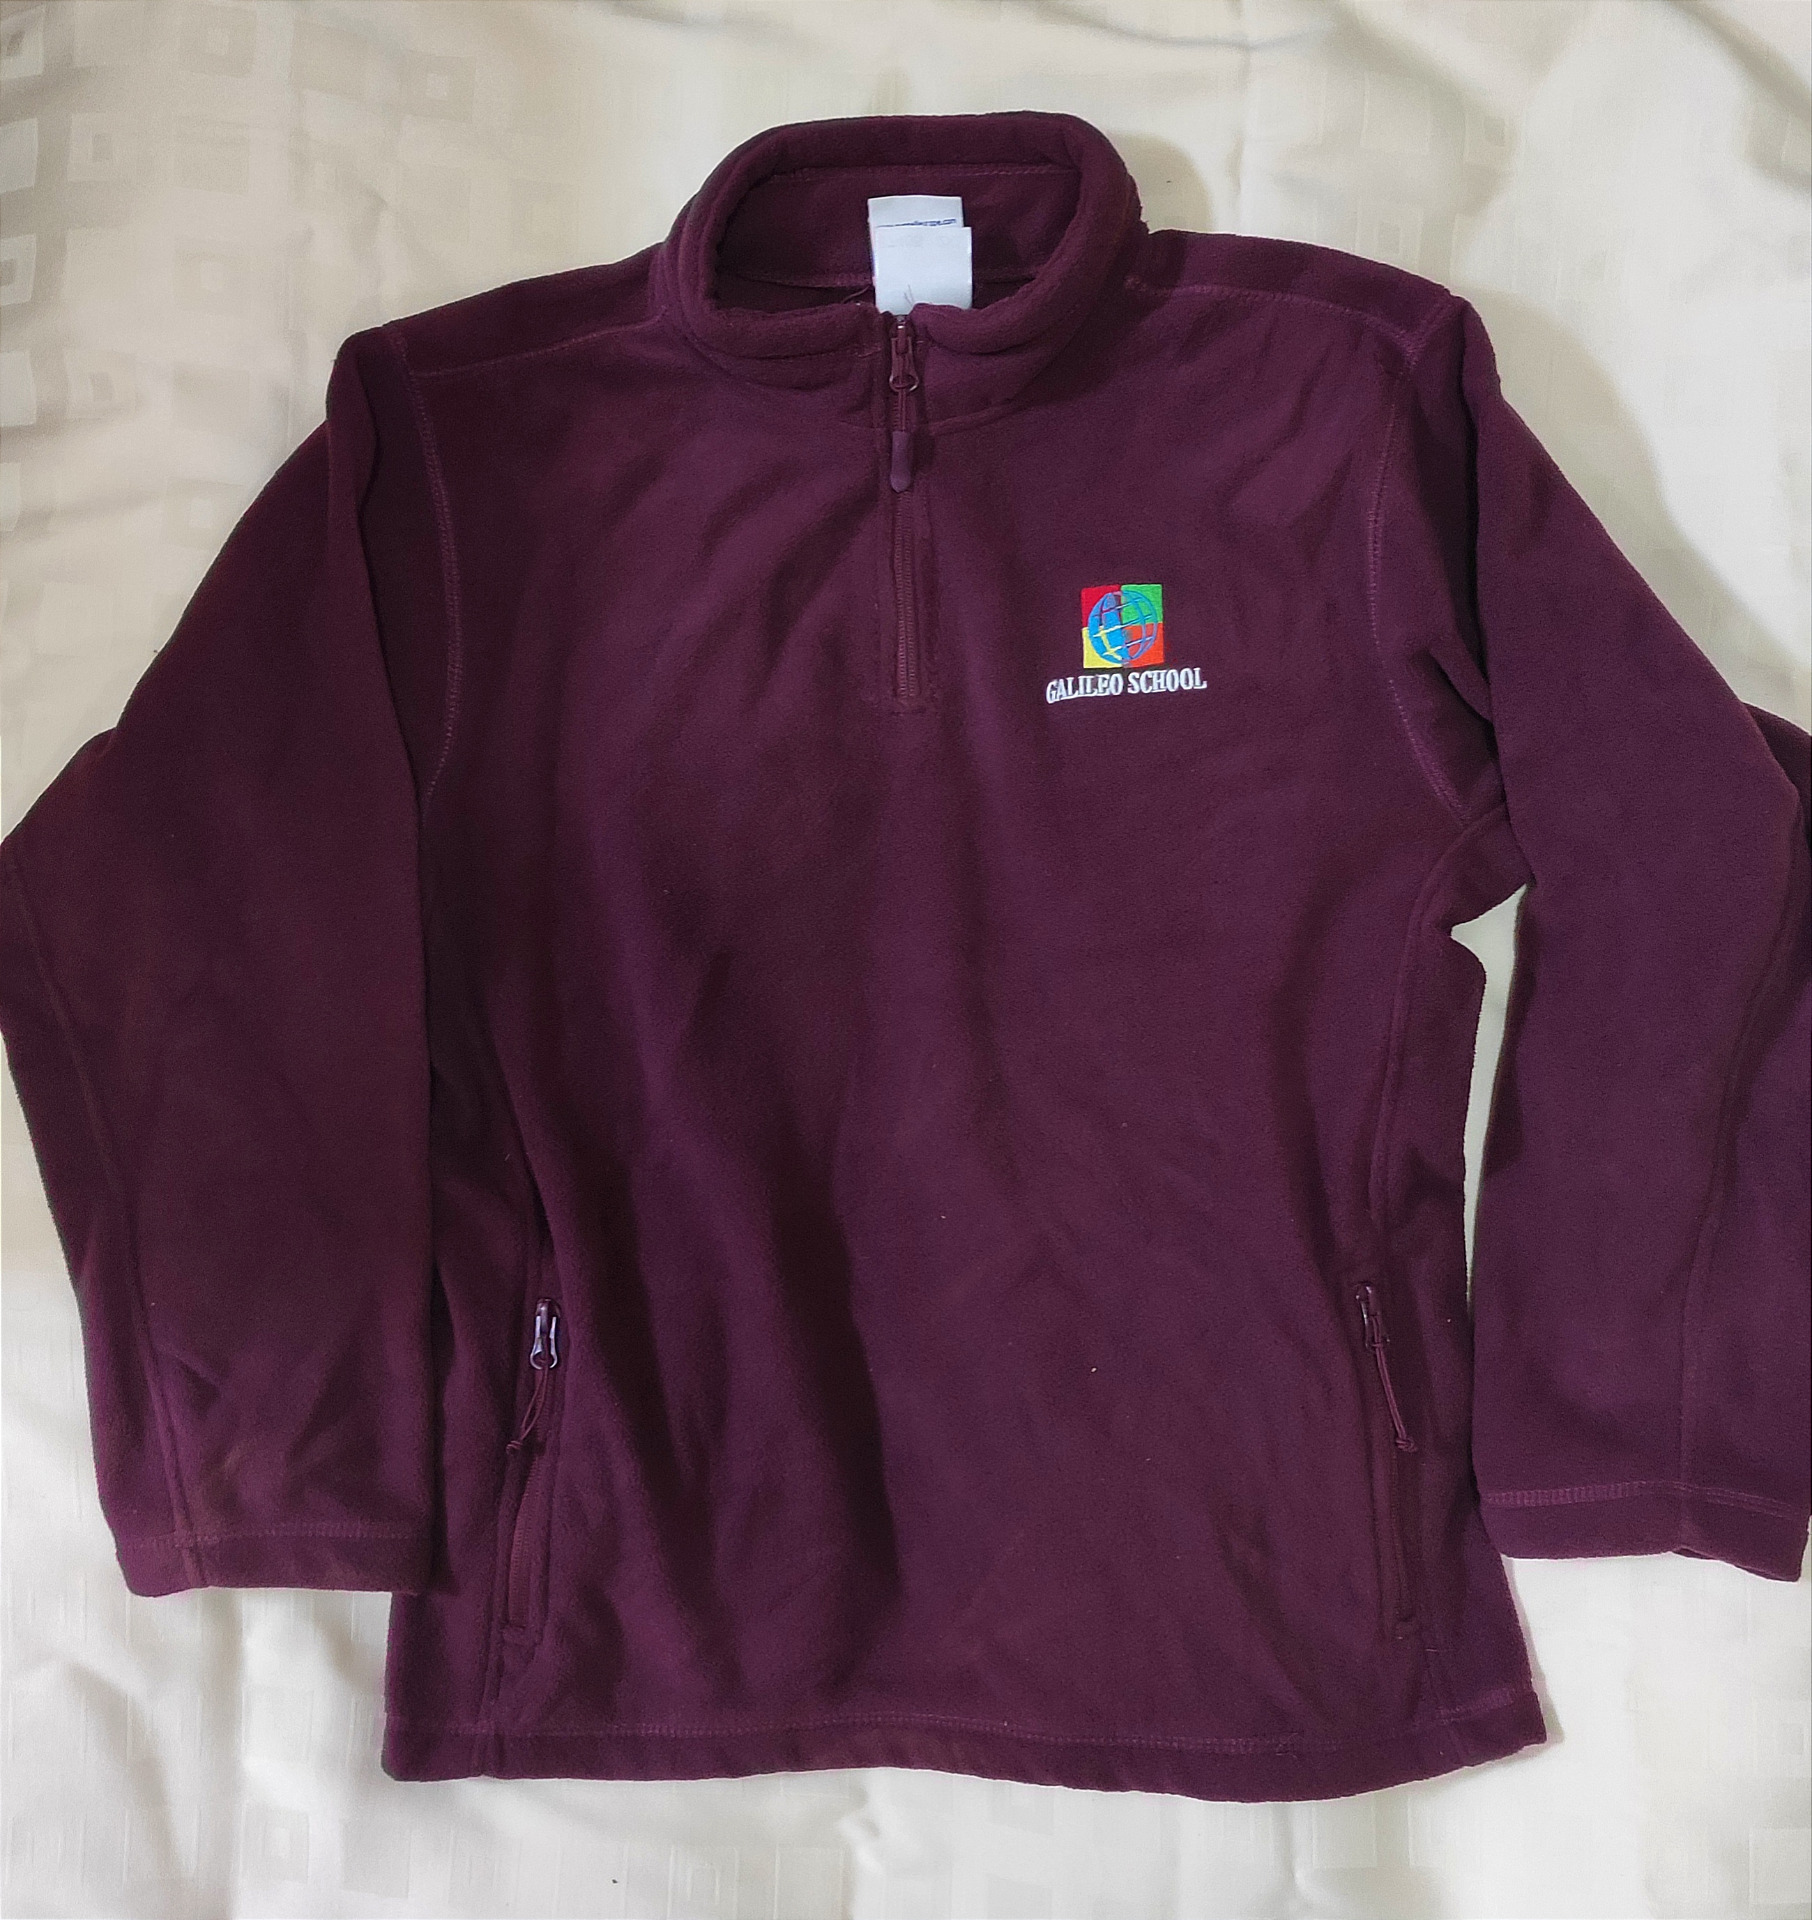 mikina hrubá - flis, krátky zips - bordová / fleece sweatshirt thick, short zip - burgundy; 

cena / price: 22€